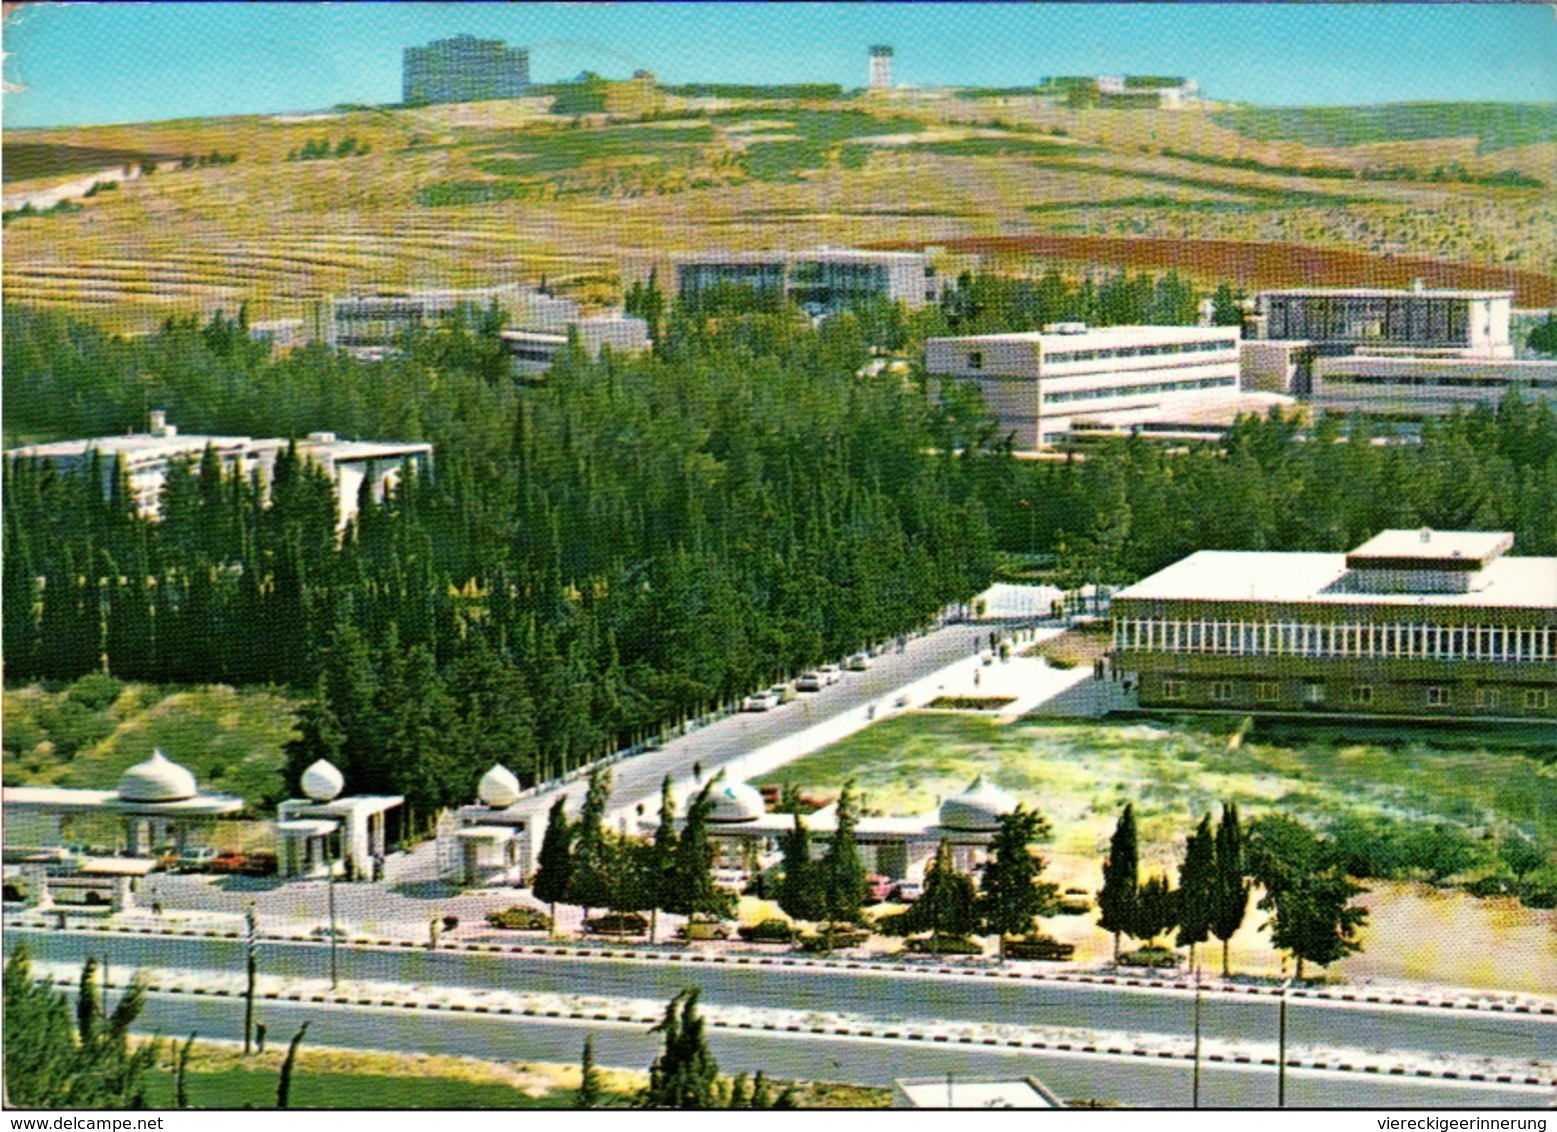 !  Postcard From Jordan, Jordanien Amman, Universität, University, Universite - Jordania